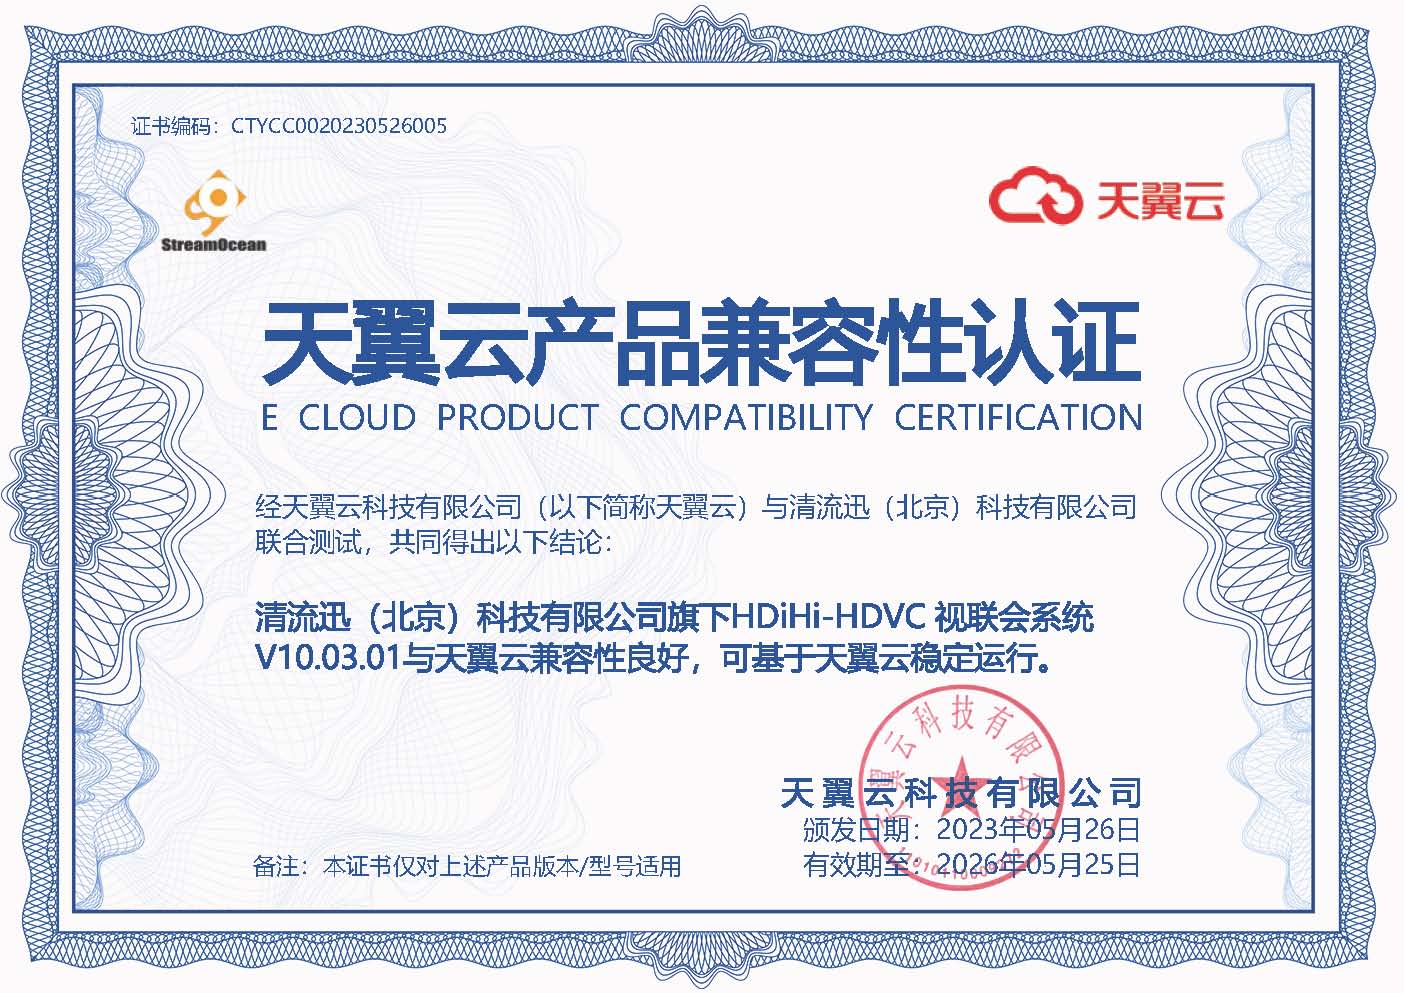 HDiHi-HDVC+视联会系统+V10.03.01_CTYCC0020230526005